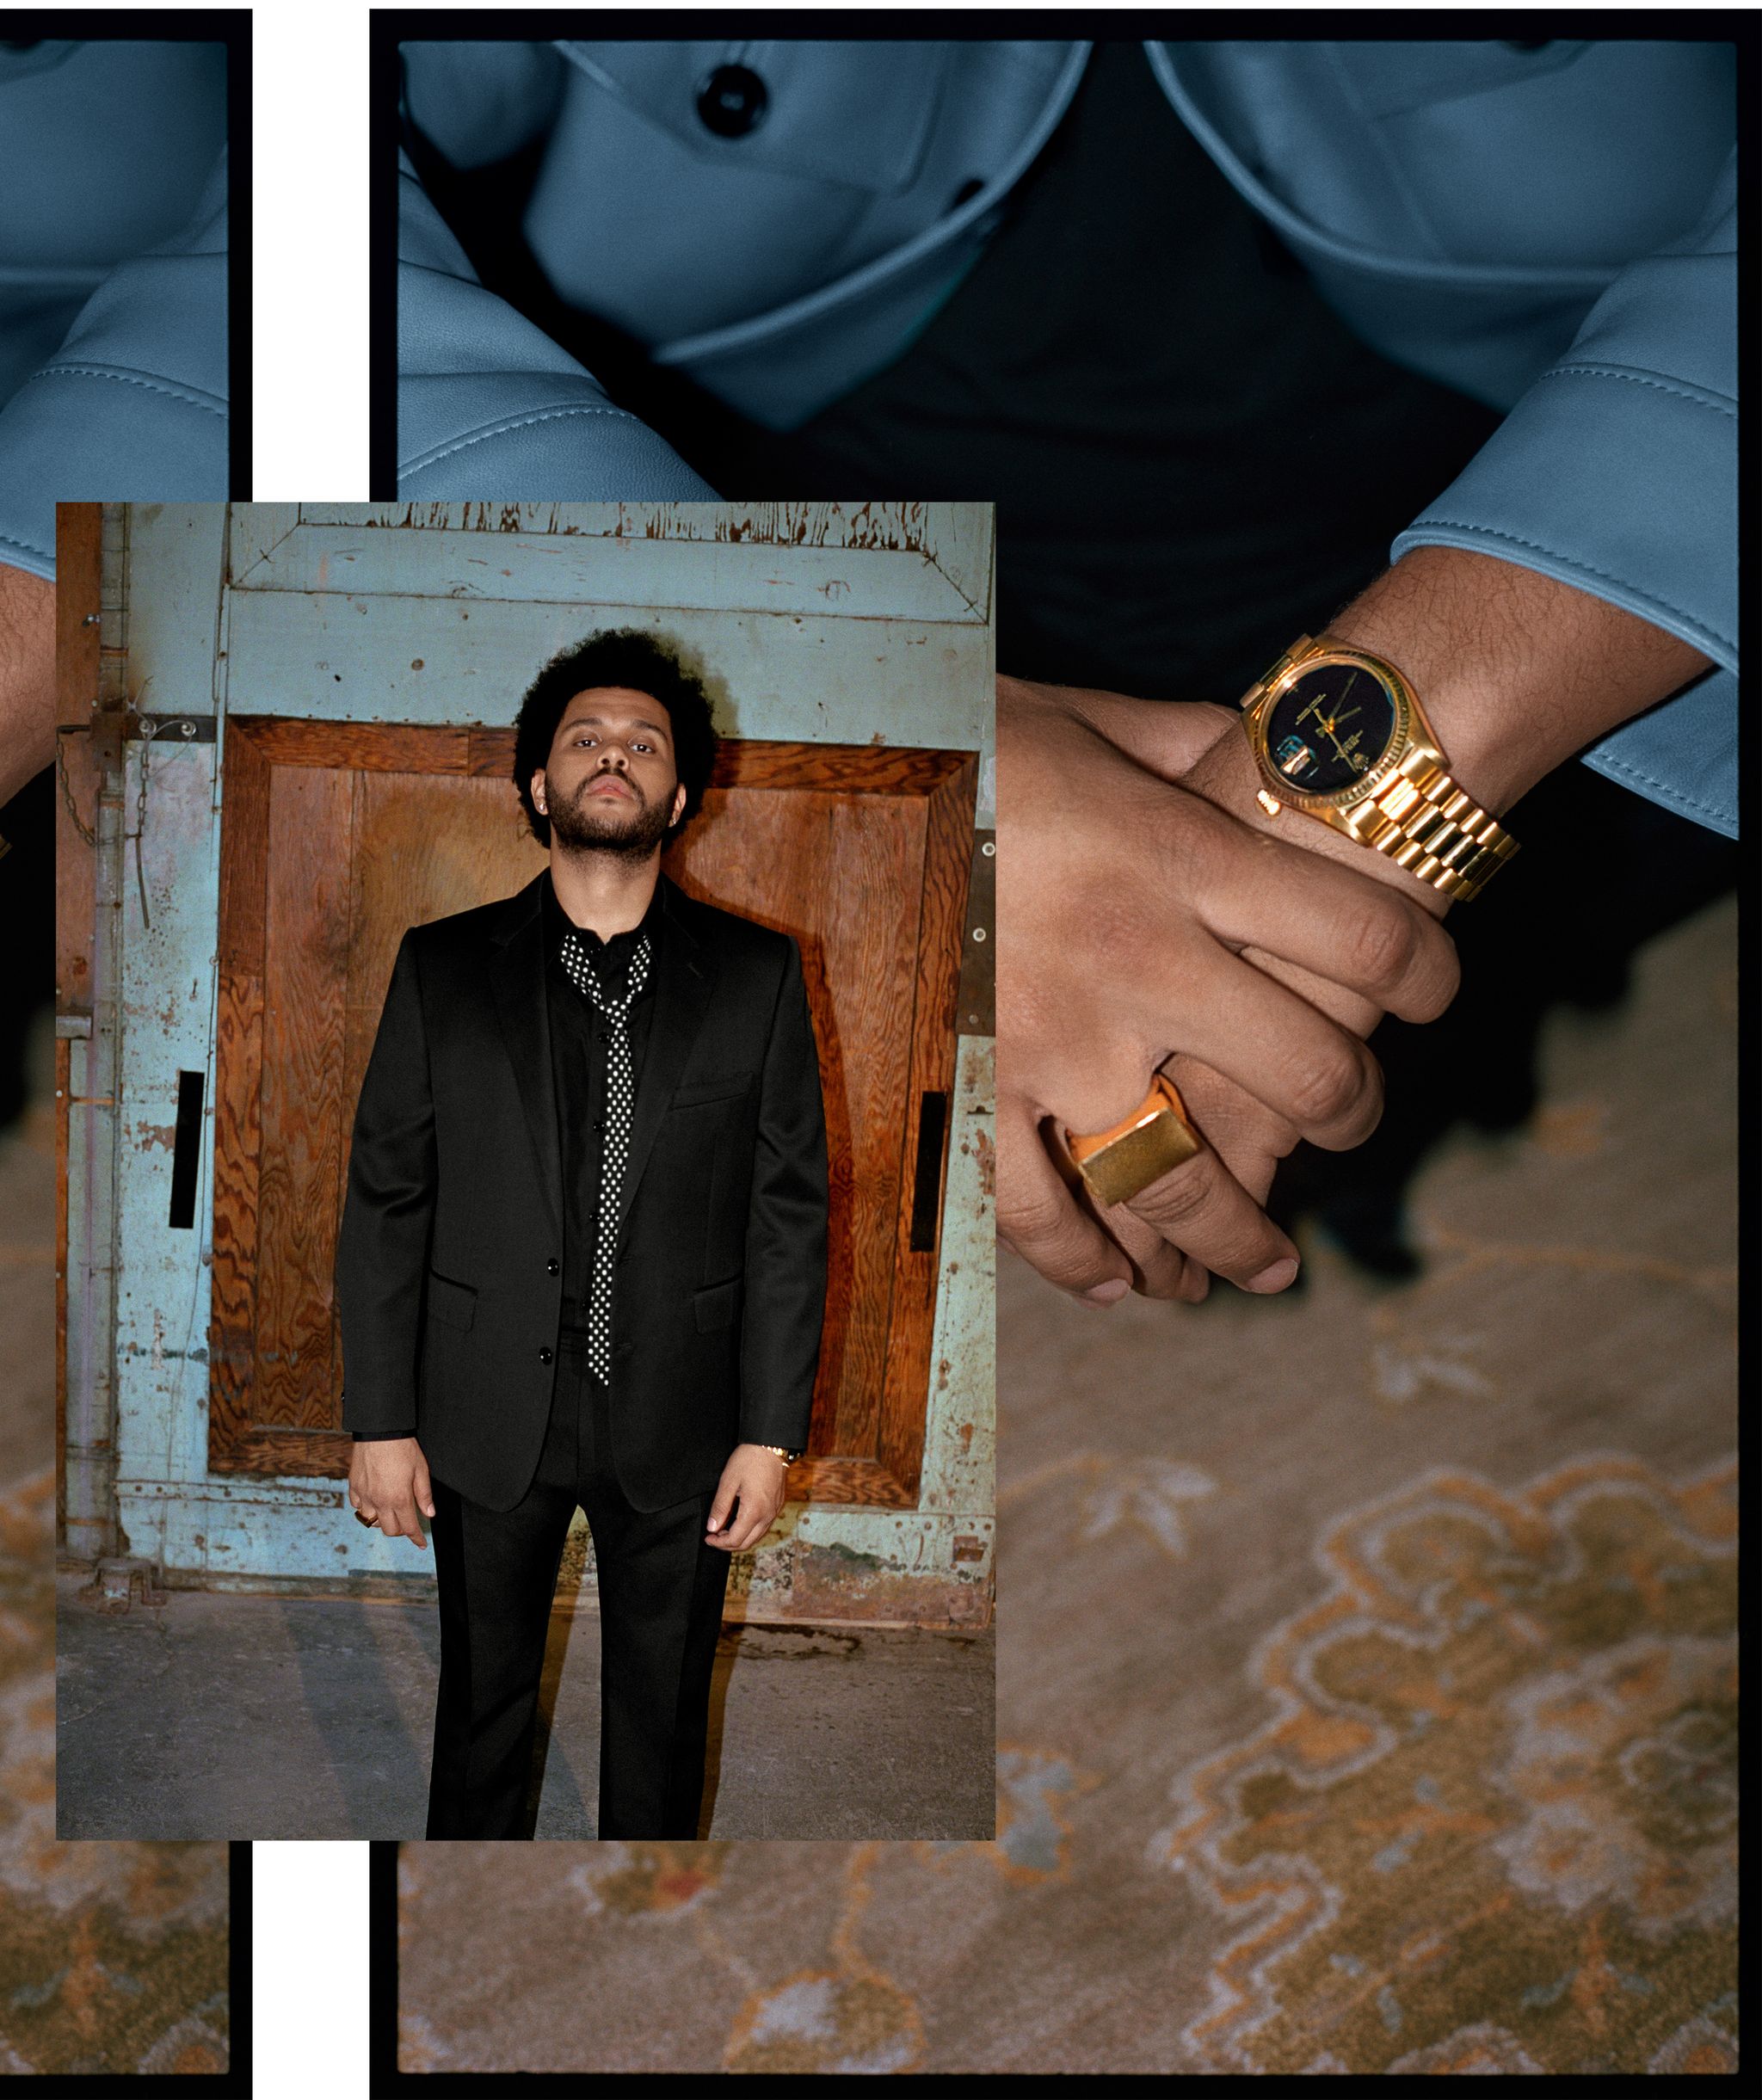 The Weeknd - Earned It (LYRICS) on Make a GIF